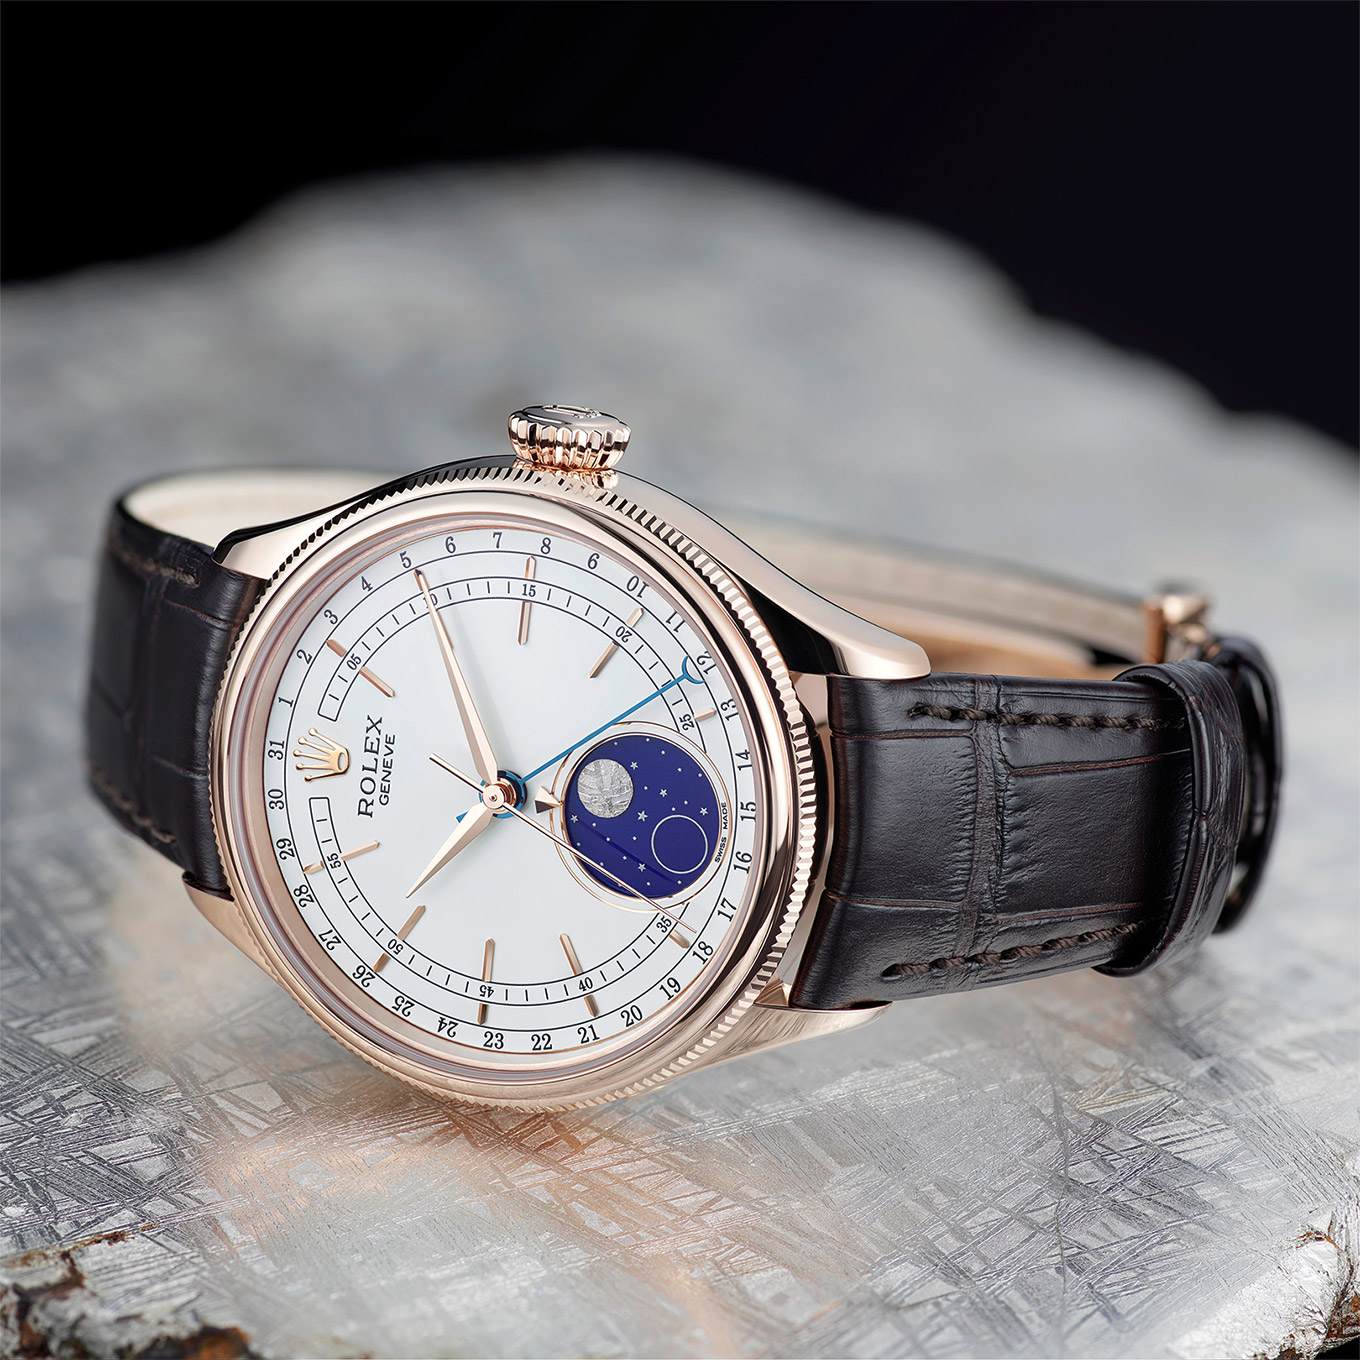 Rolex Cellini - The Classical Watch